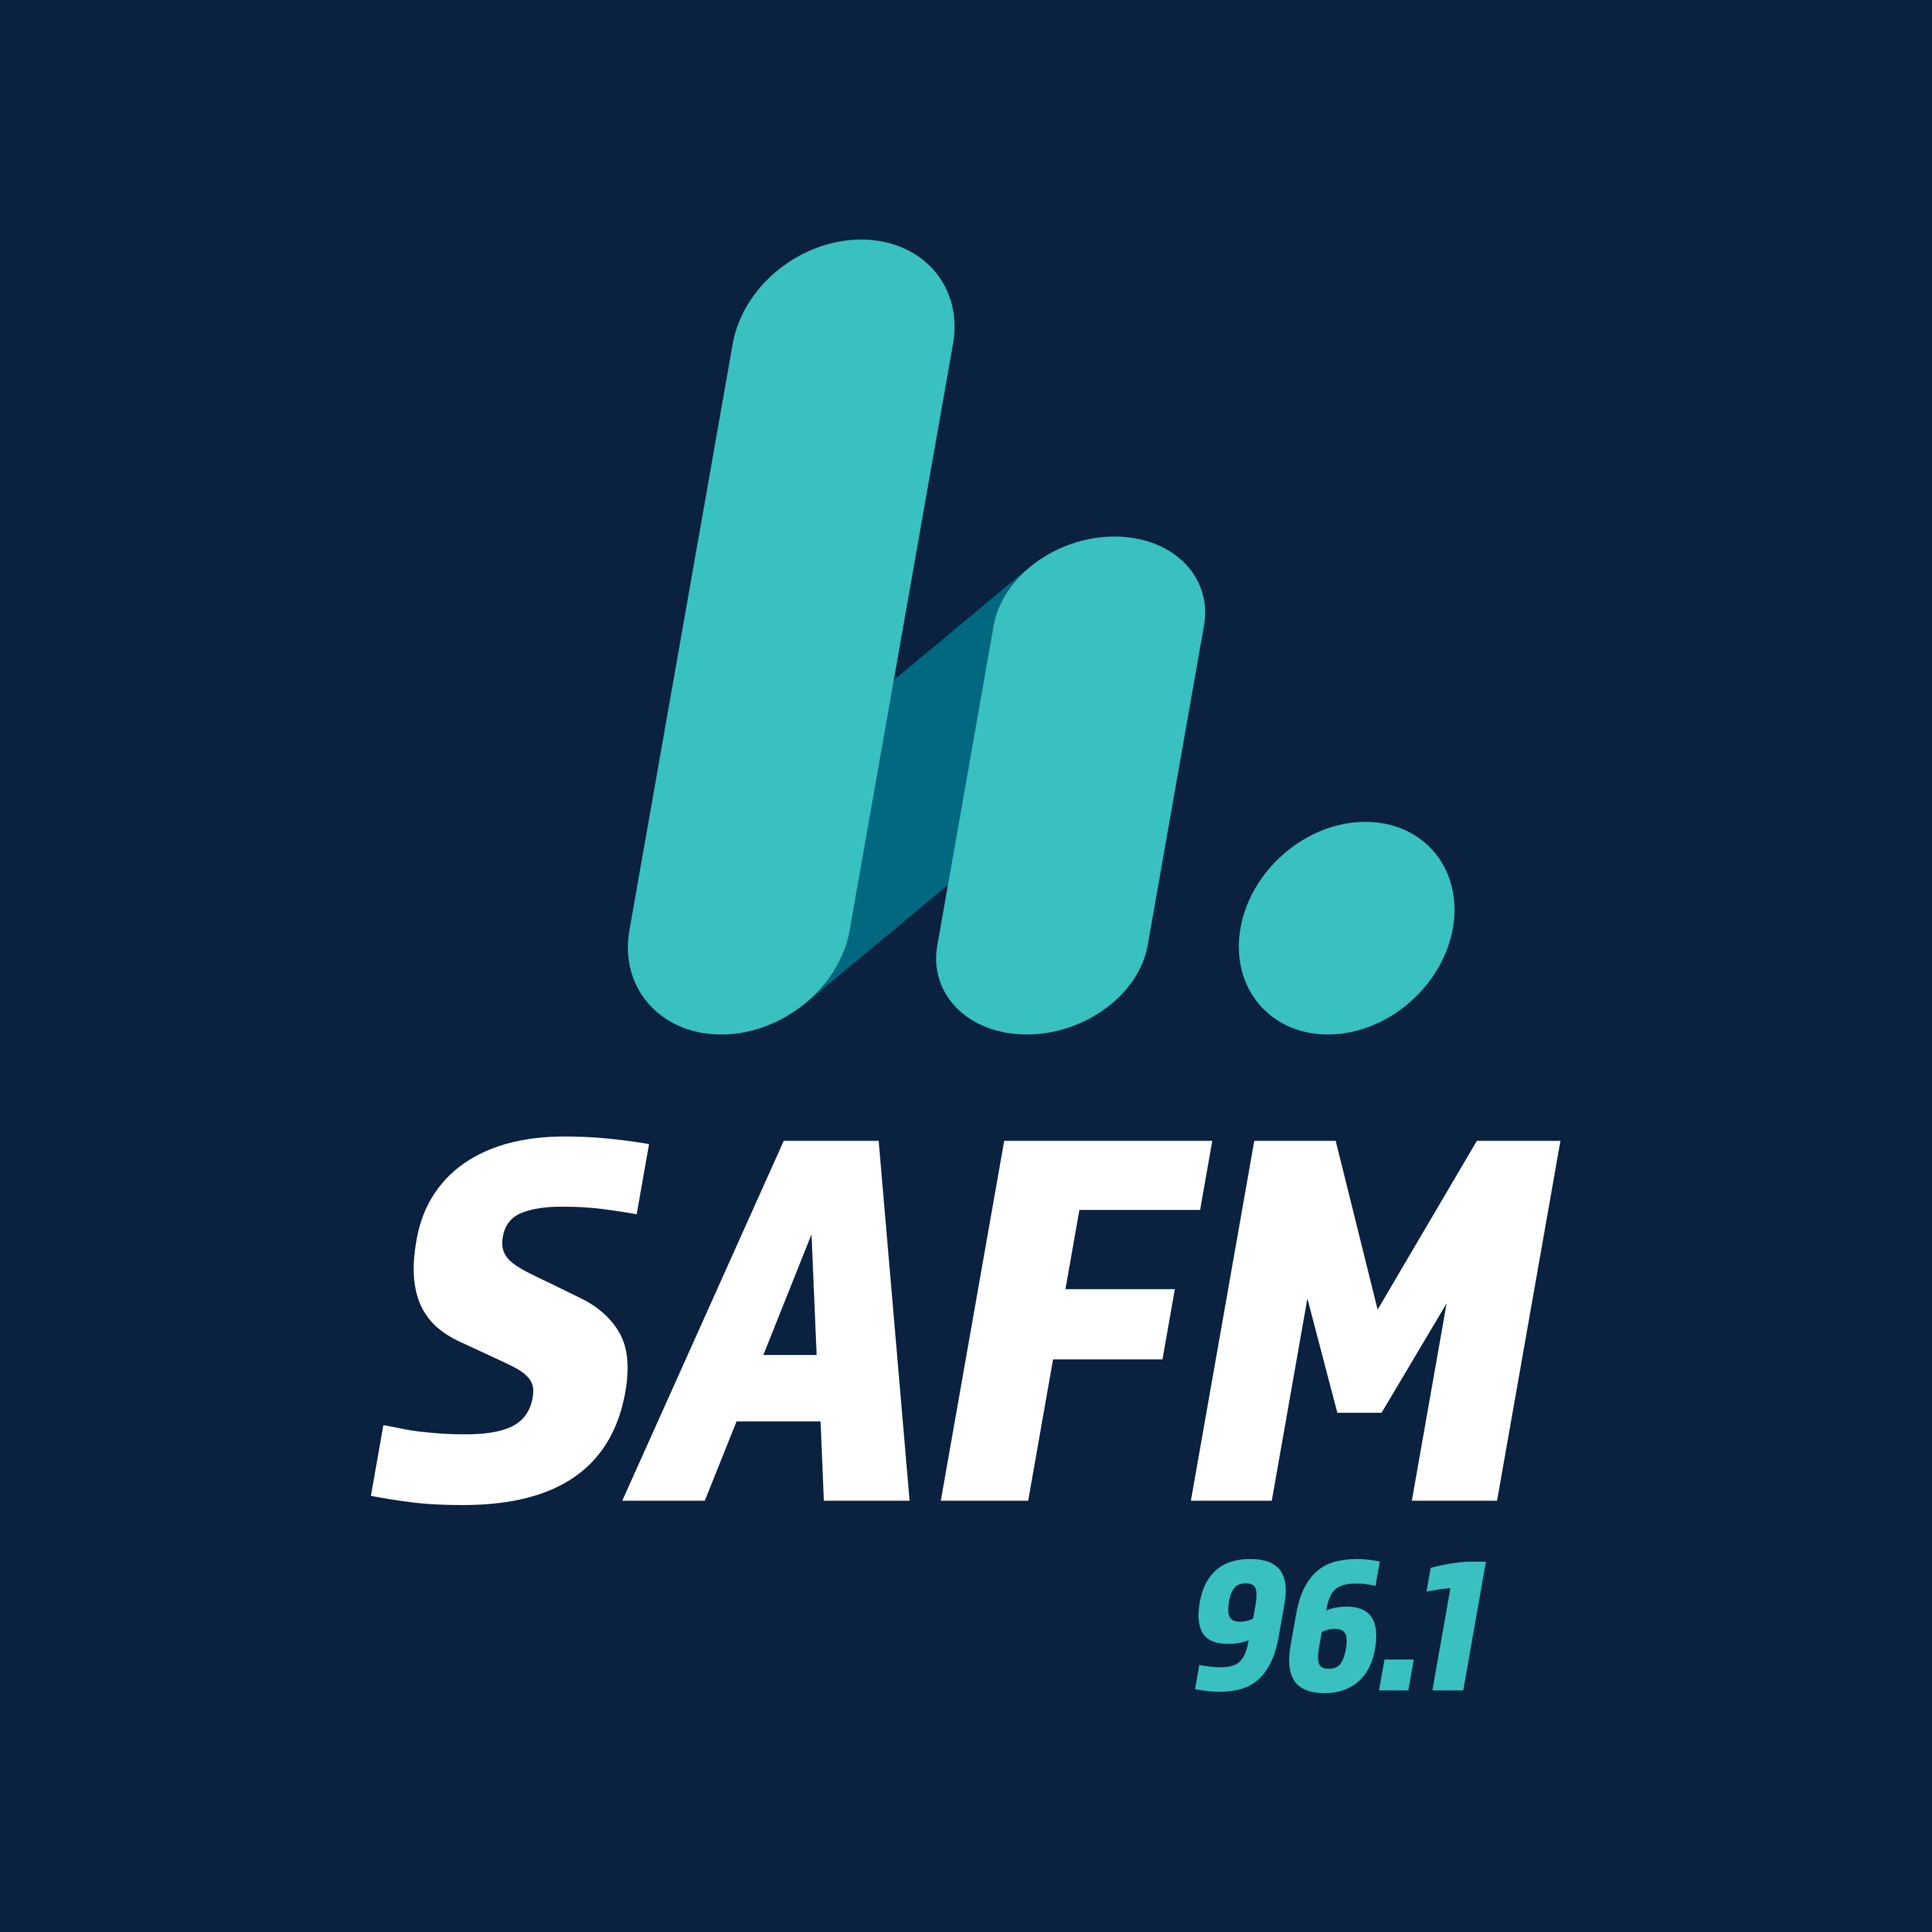 SAFM Limestone Coast logo